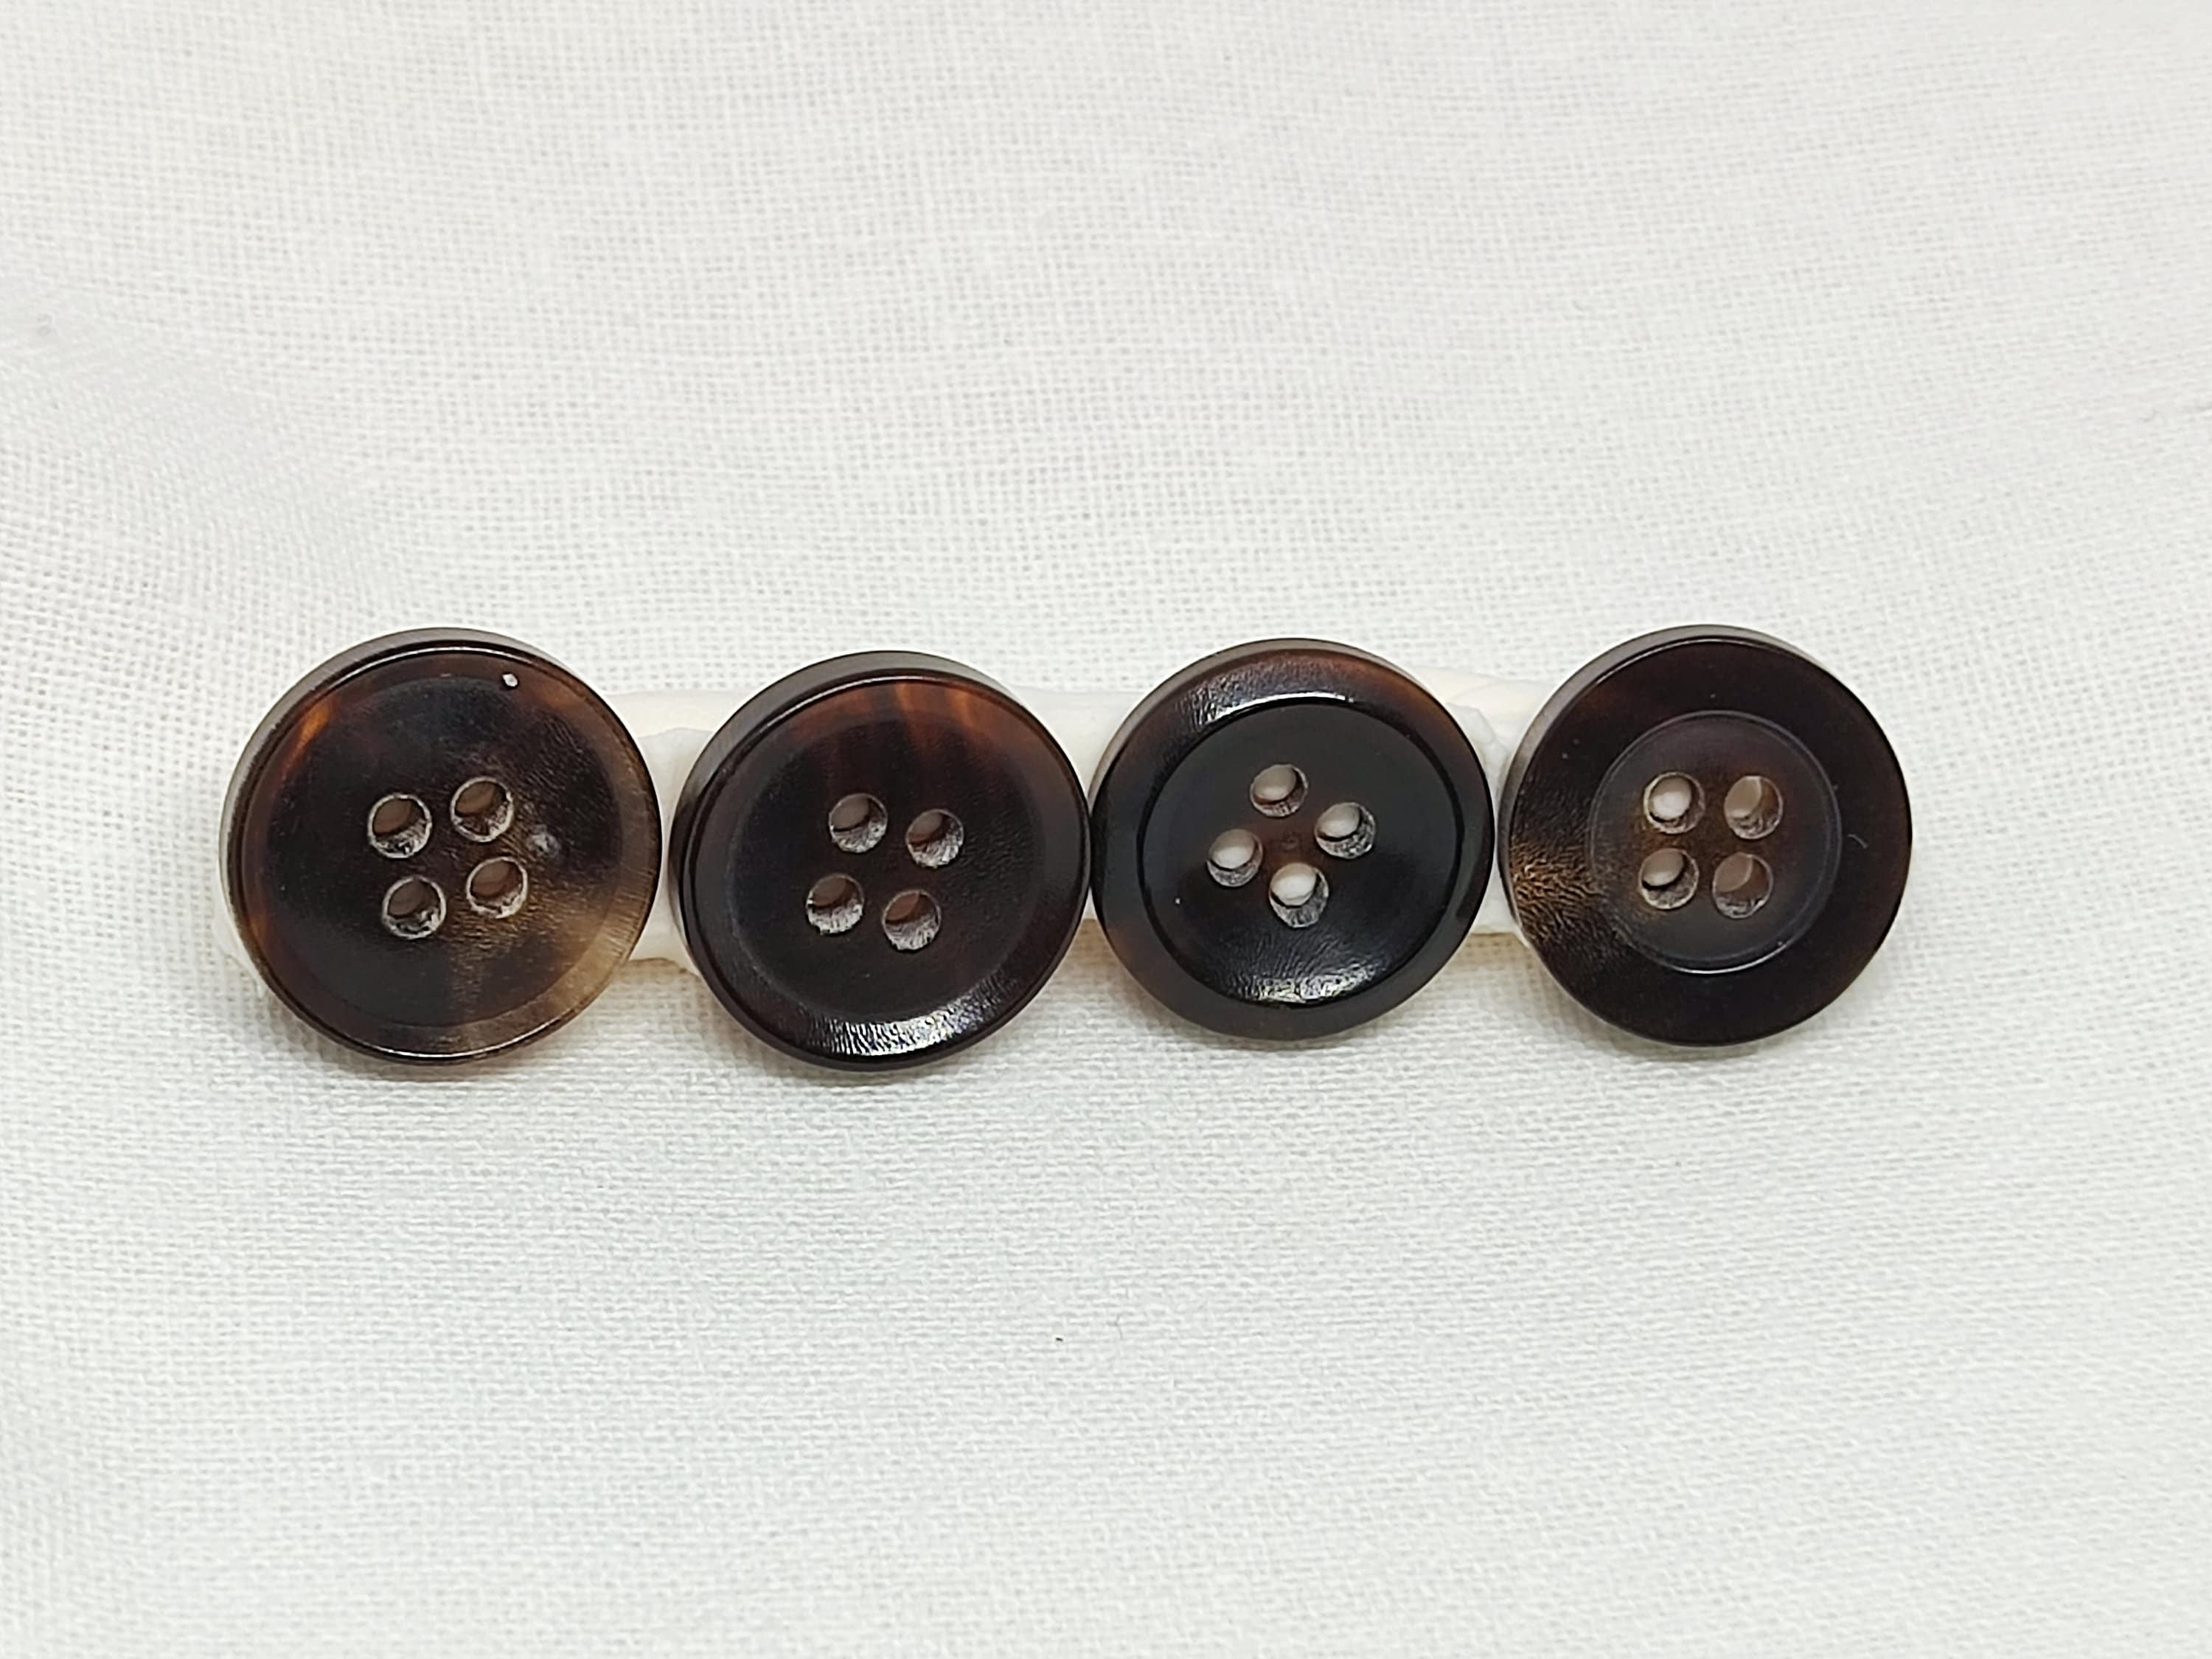 12pcs Genuine Horn Button Set for Suit Jacket Blazer Coat Light Brown Black  Dark Brown Buttons